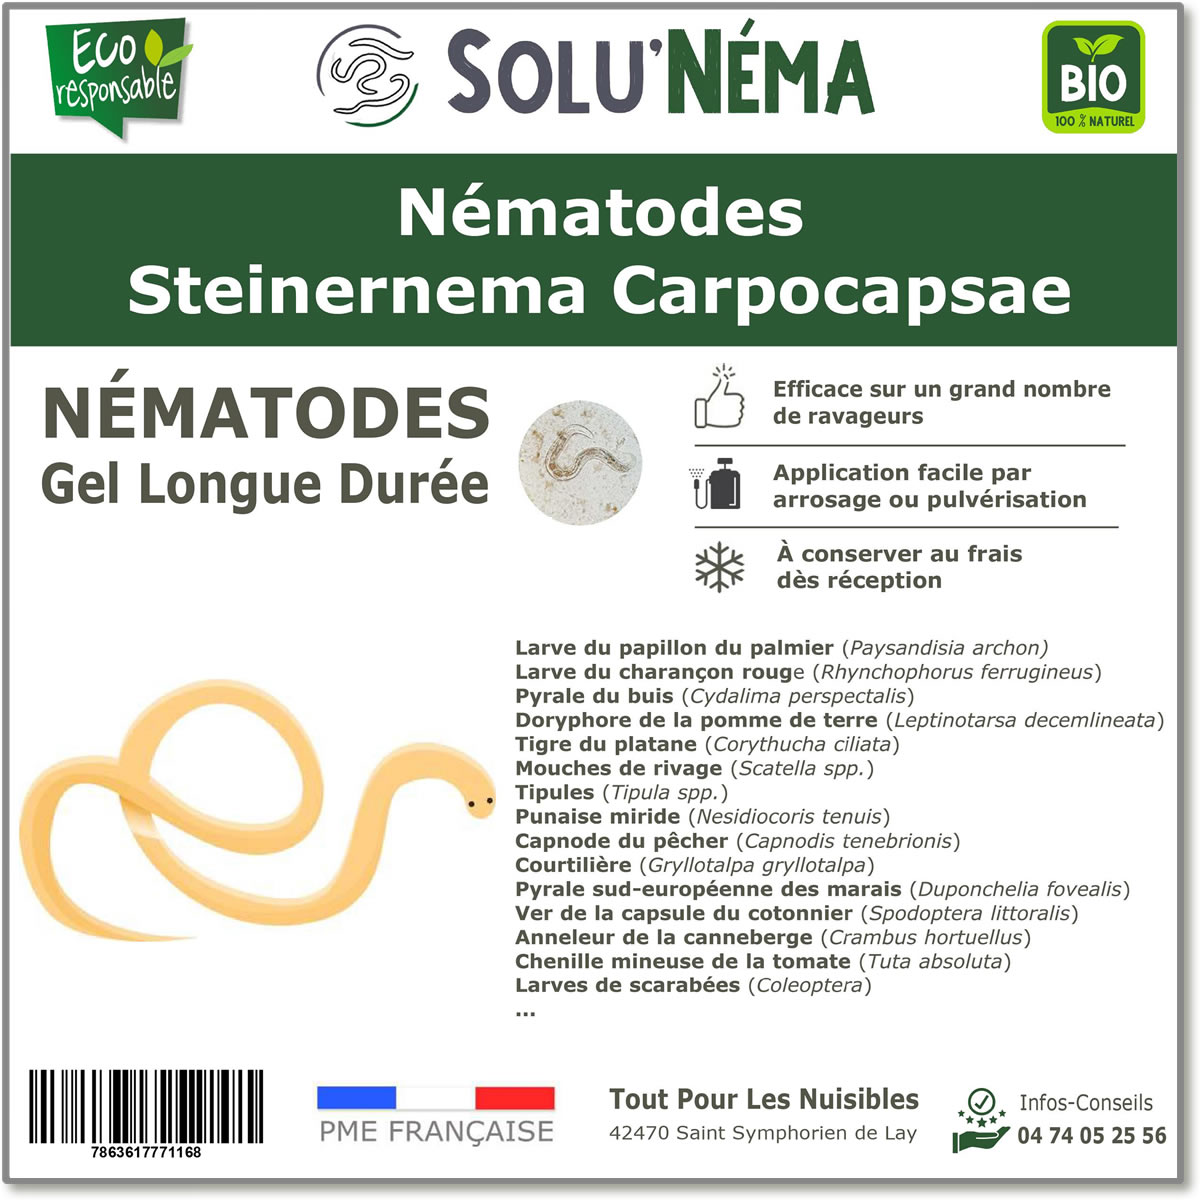 SOLUNEMA - Nématodes Steinernema Carpocapsae (SC)